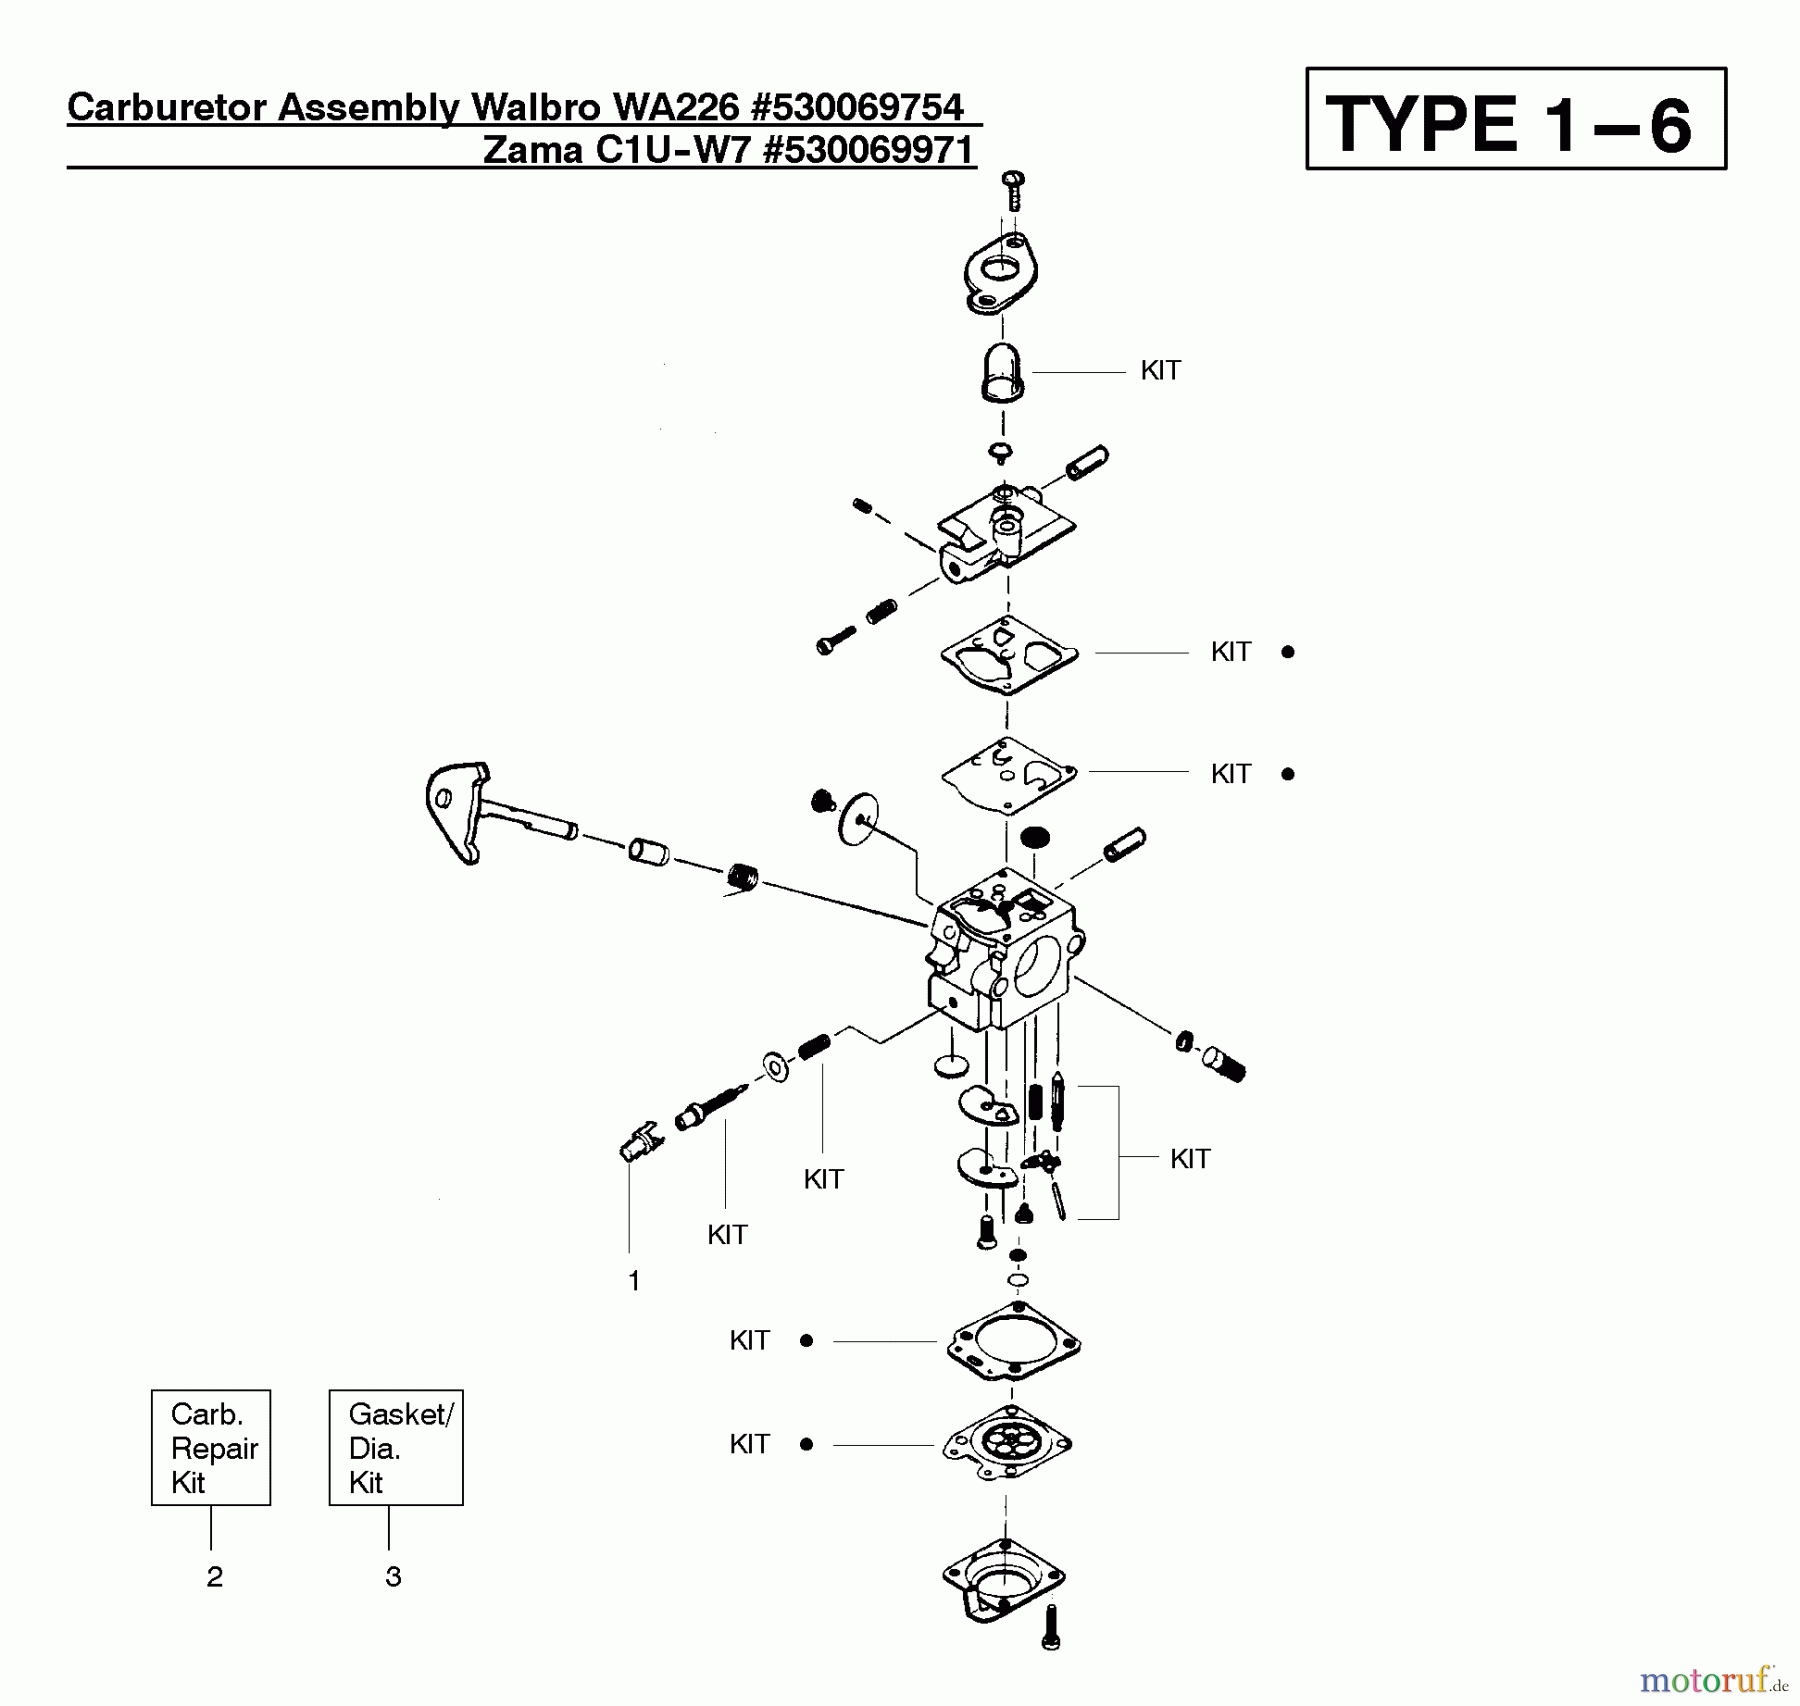  Poulan / Weed Eater Motorsensen, Trimmer XT600 (Type 3) - Weed Eater String Trimmer Carburetor Assembly (WT226) 530069754, (Zama C1U-W7) 530069971